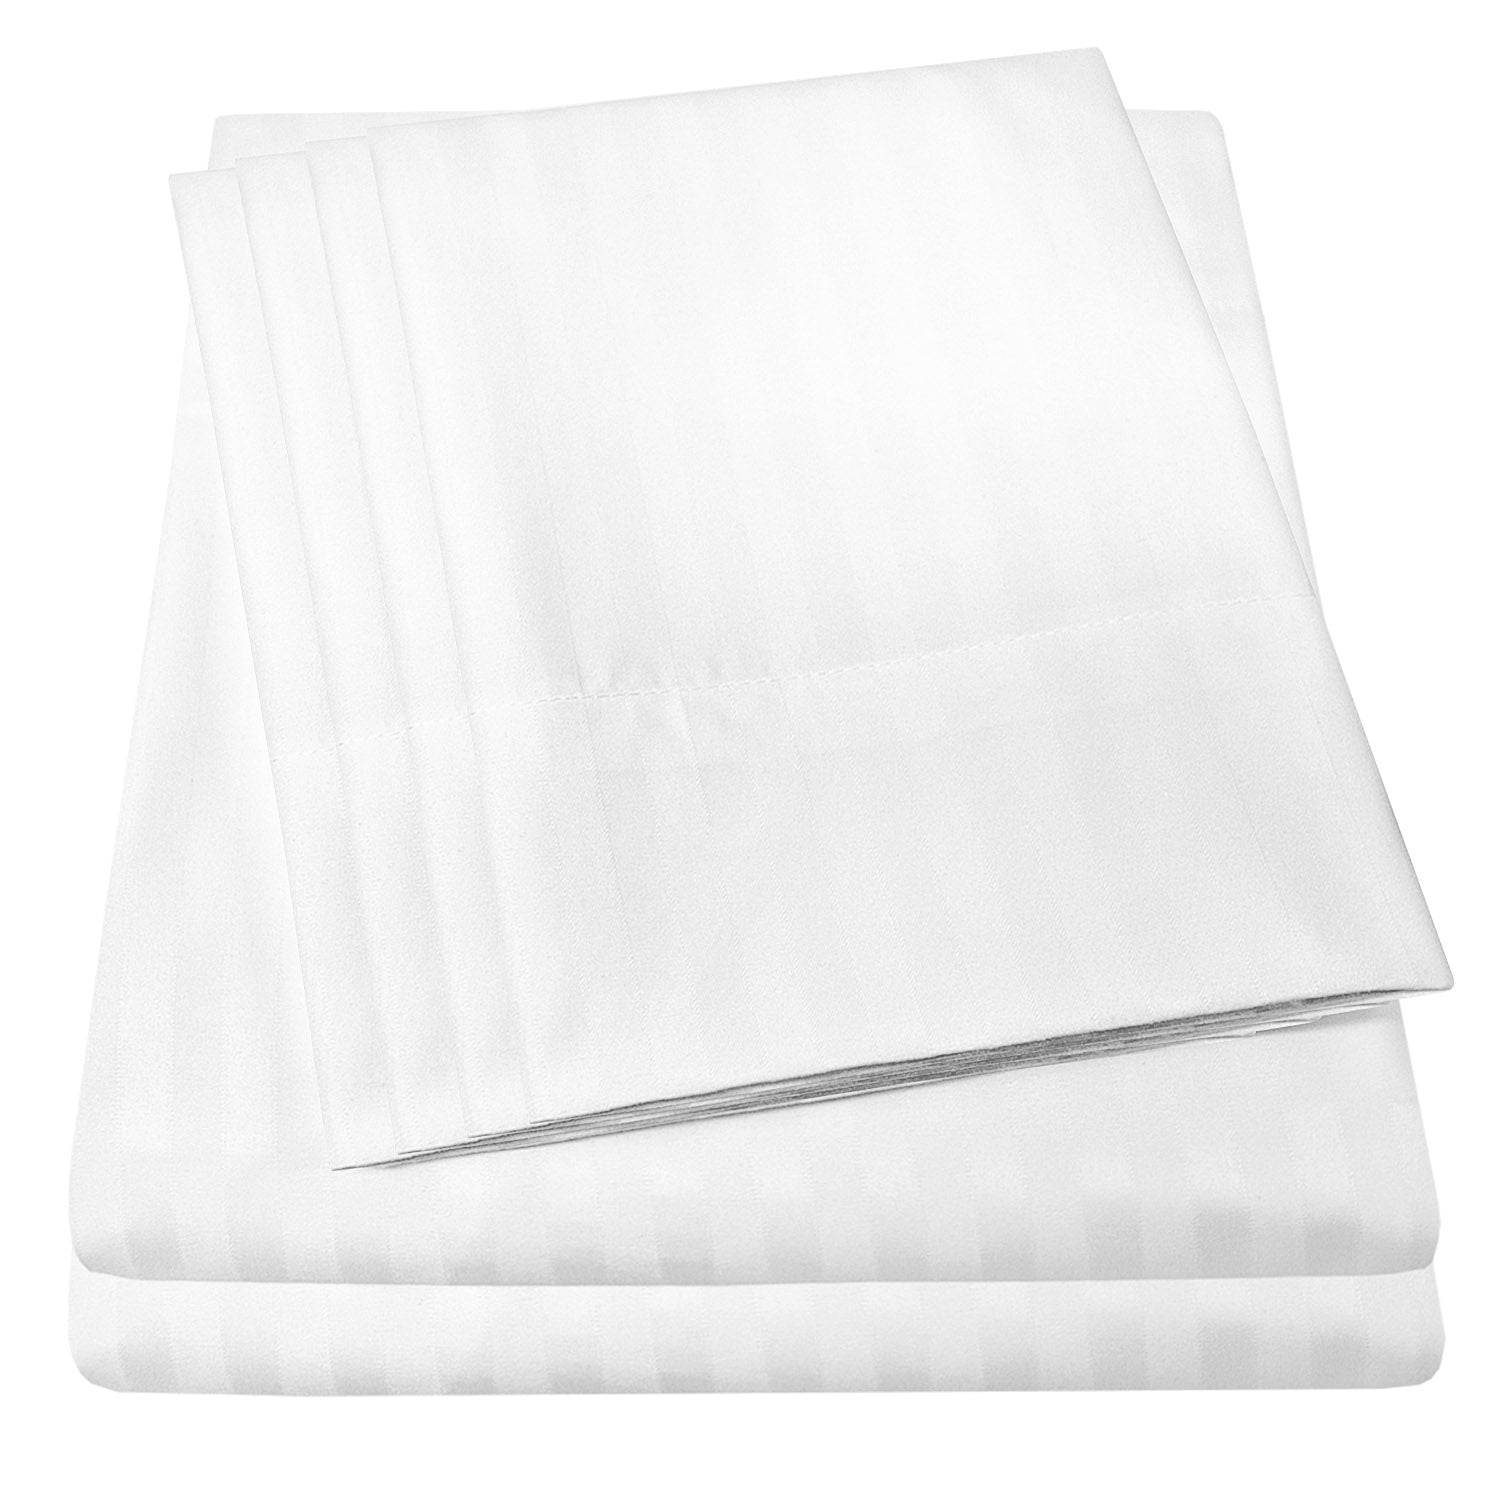 Deluxe 6-Piece Bed Sheet Set (Dobby Stripe White) - Folded